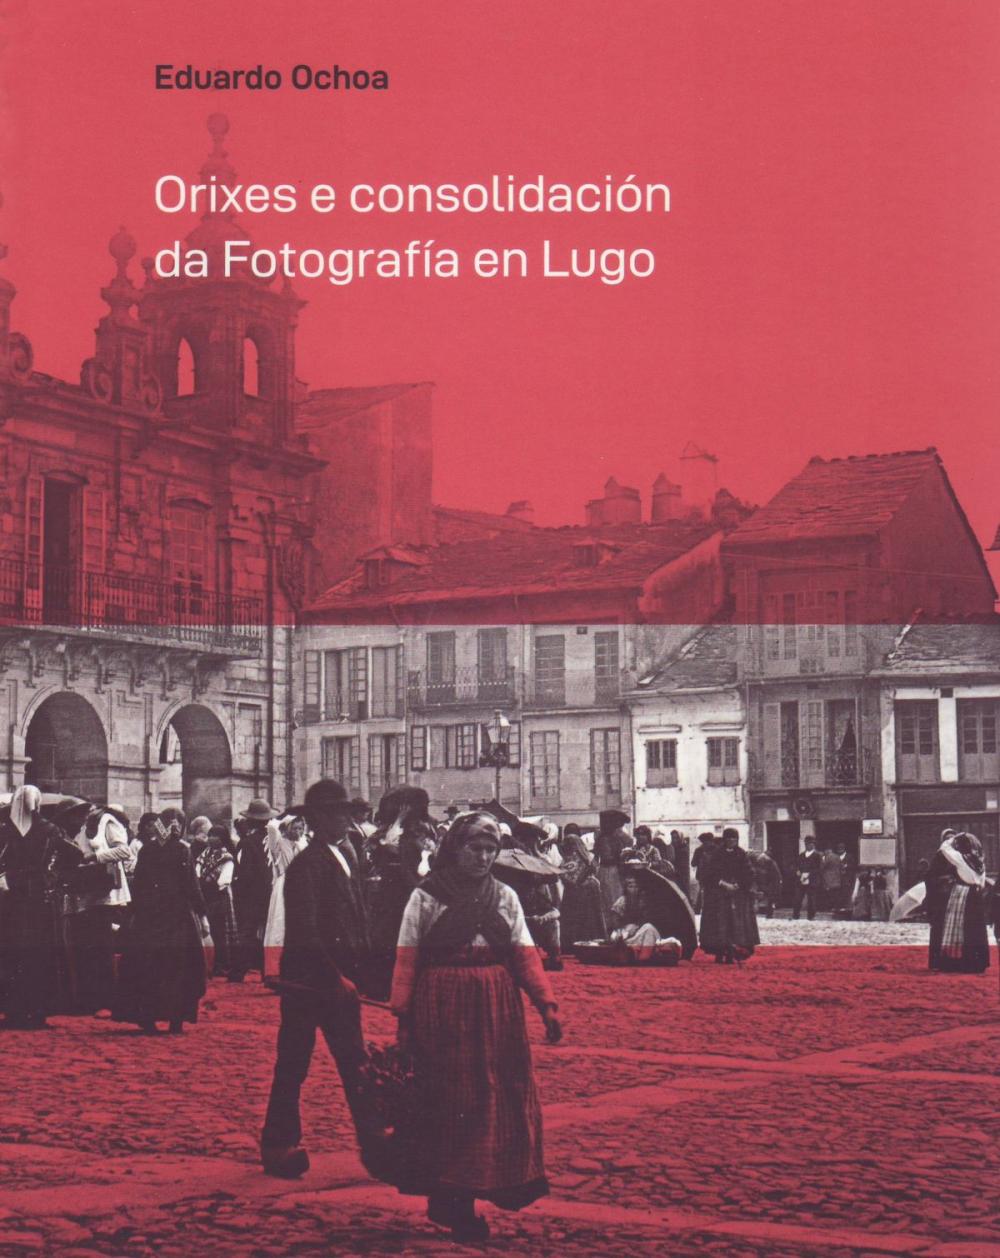 Os primeiros anos da fotografía e os primeiros fotógrafos de Lugo, estudiados por Eduardo Ochoa